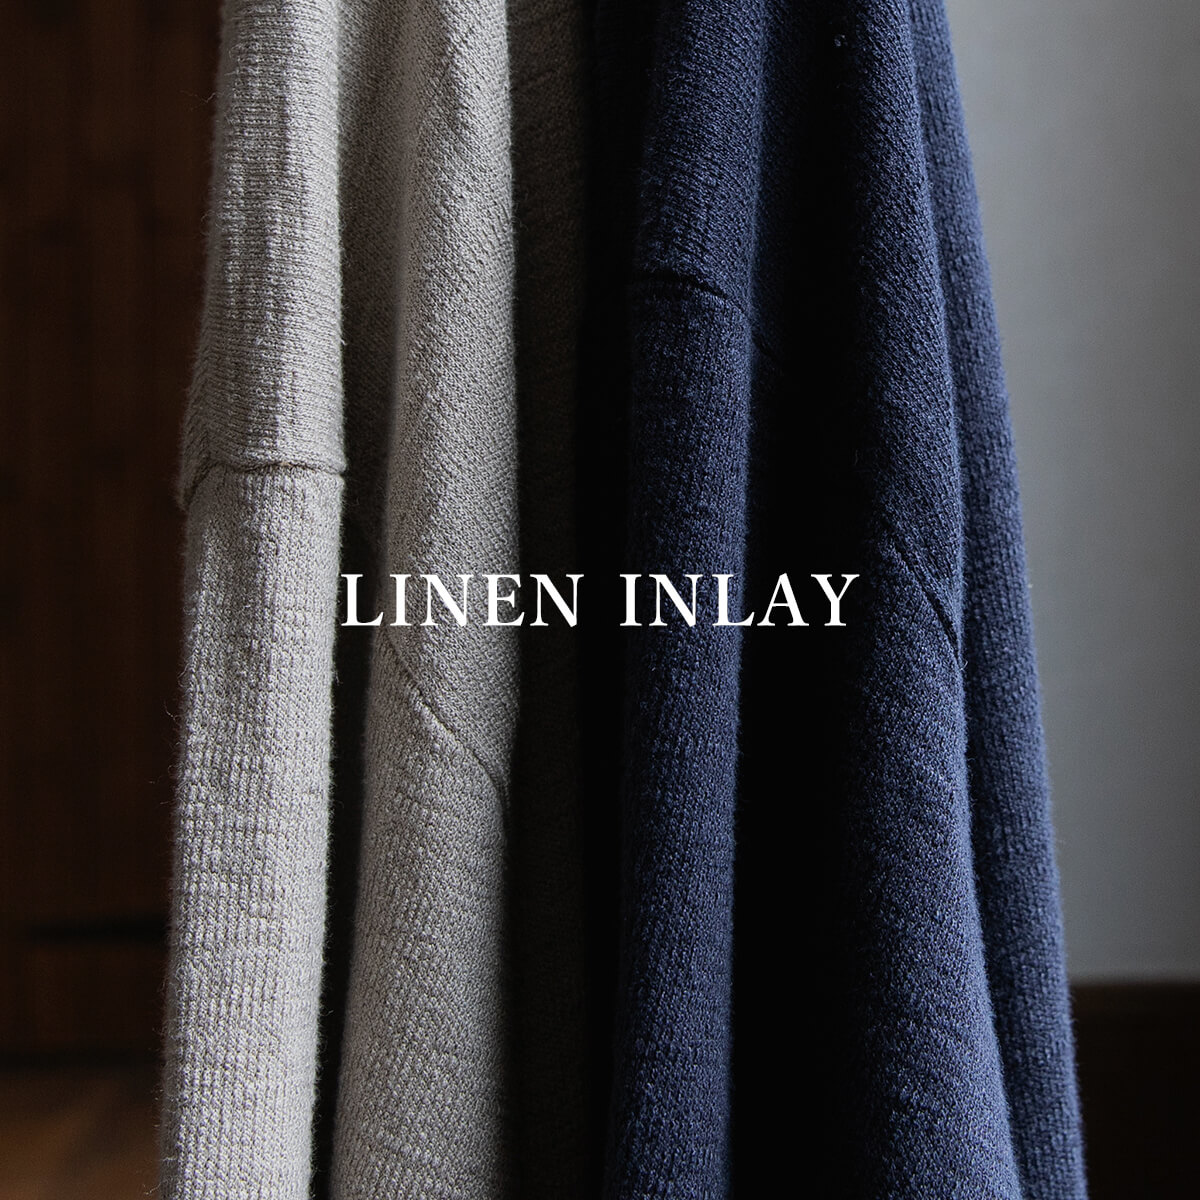 linen inlay